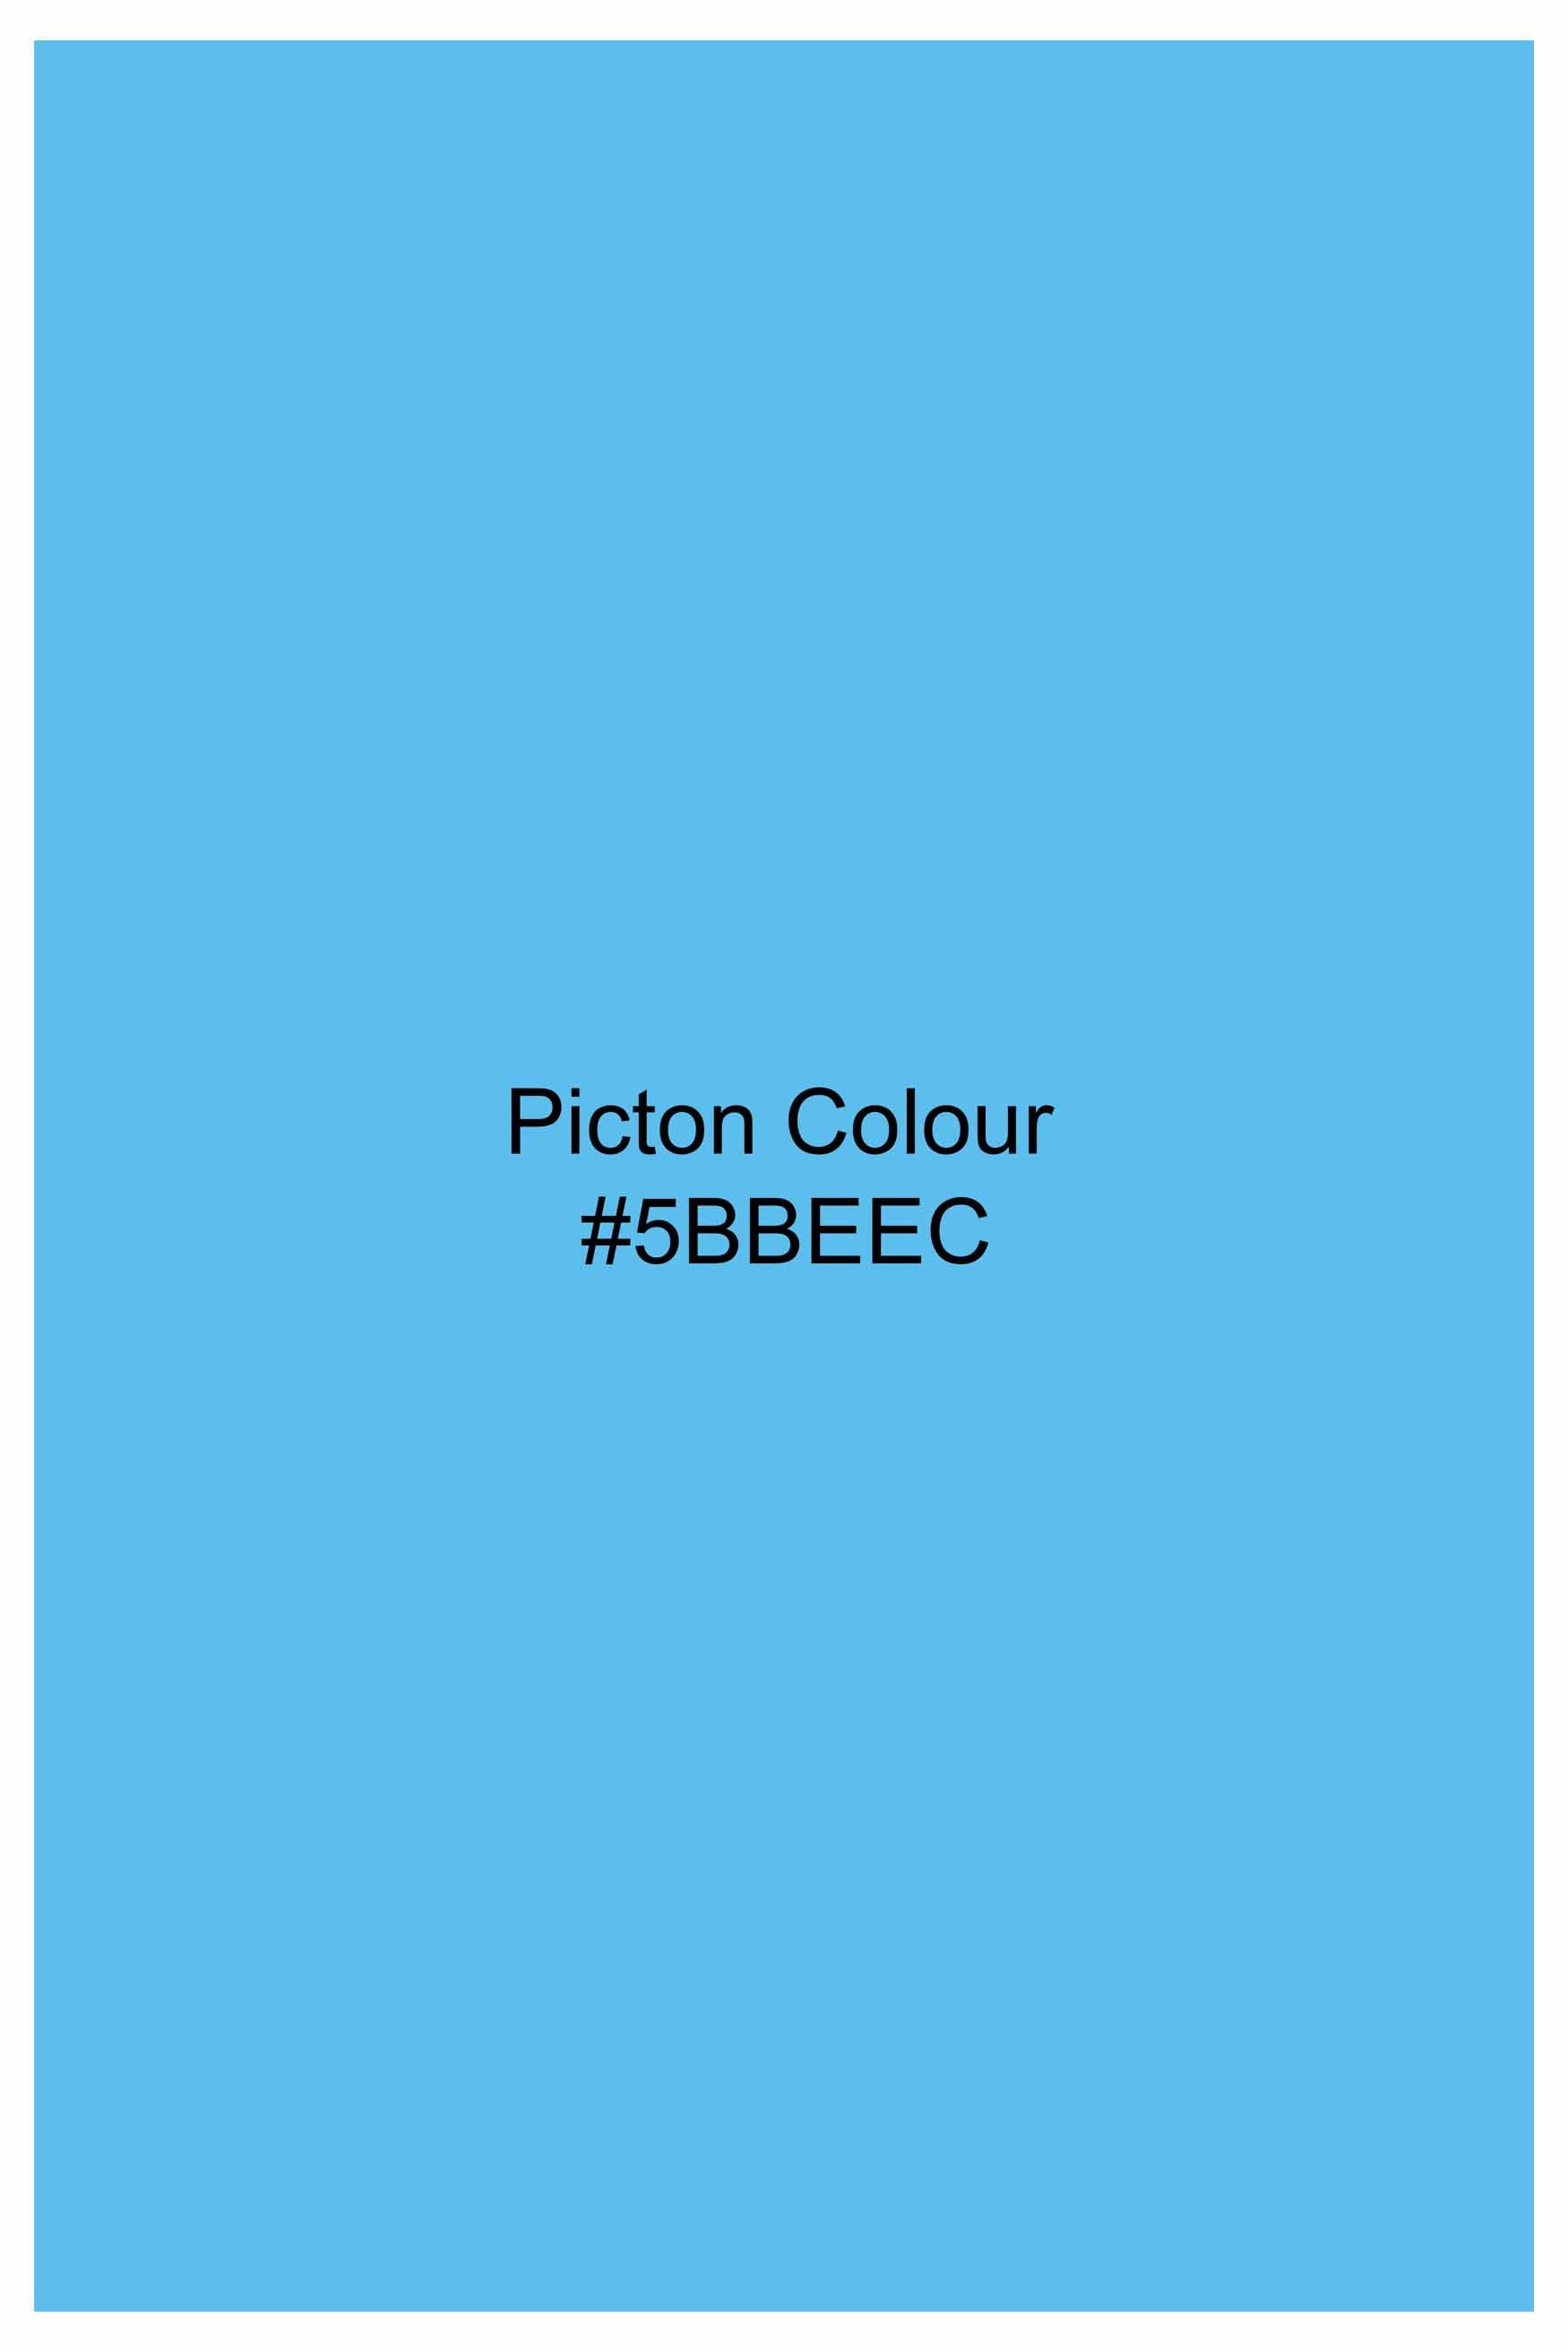 Picton Blue Goddess Durga Hand Painted Dobby Textured Premium Giza Cotton Designer Shirt 9141-ART-38, 9141-ART-H-38, 9141-ART-39, 9141-ART-H-39, 9141-ART-40, 9141-ART-H-40, 9141-ART-42, 9141-ART-H-42, 9141-ART-44, 9141-ART-H-44, 9141-ART-46, 9141-ART-H-46, 9141-ART-48, 9141-ART-H-48, 9141-ART-50, 9141-ART-H-50, 9141-ART-52, 9141-ART-H-52